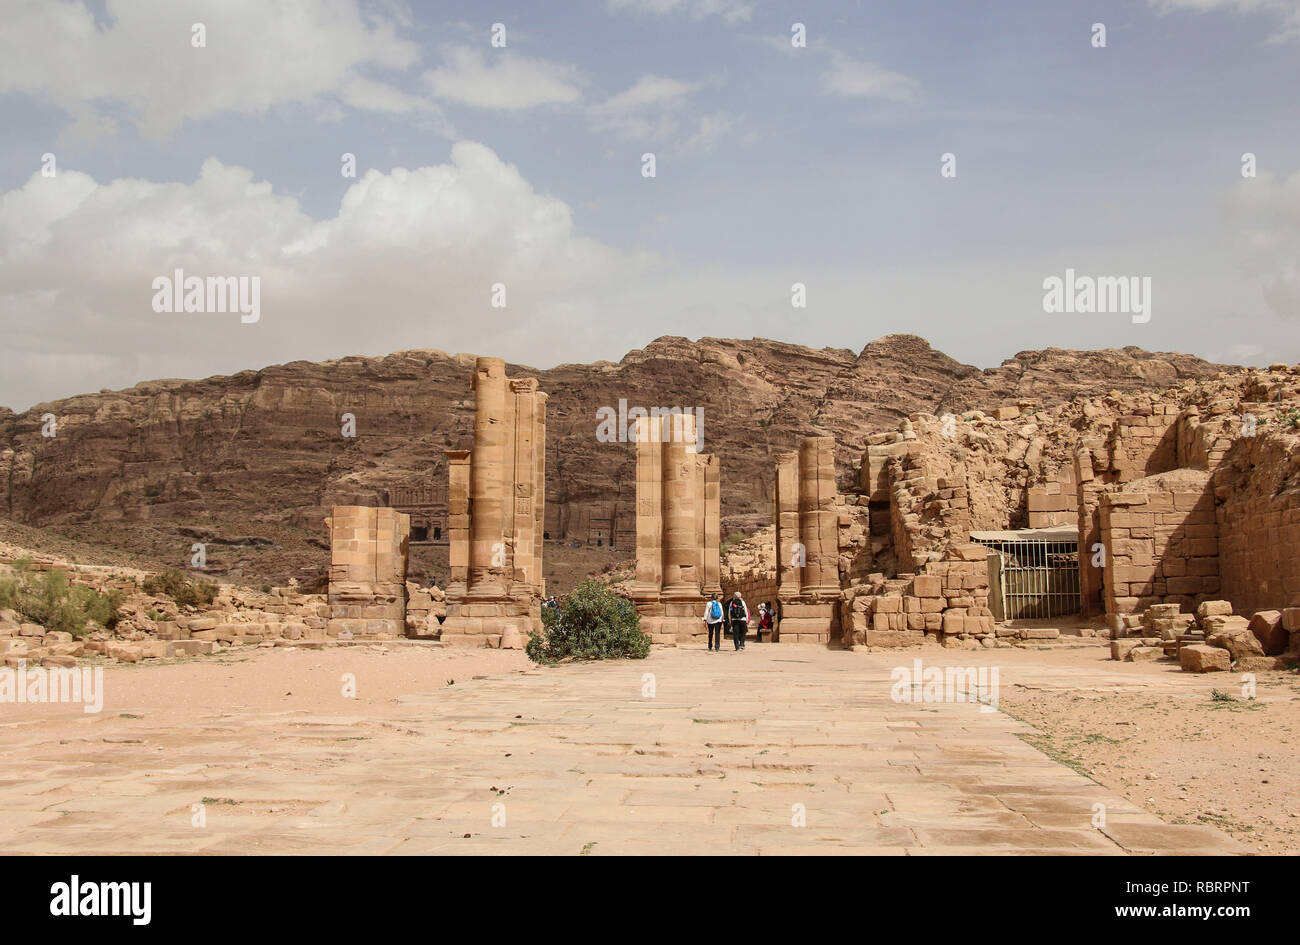 Panoramic view Ruins of Great Temple Gates in the ancient Arab Nabataean Kingdom city of Petra. Jordan Stock Photo